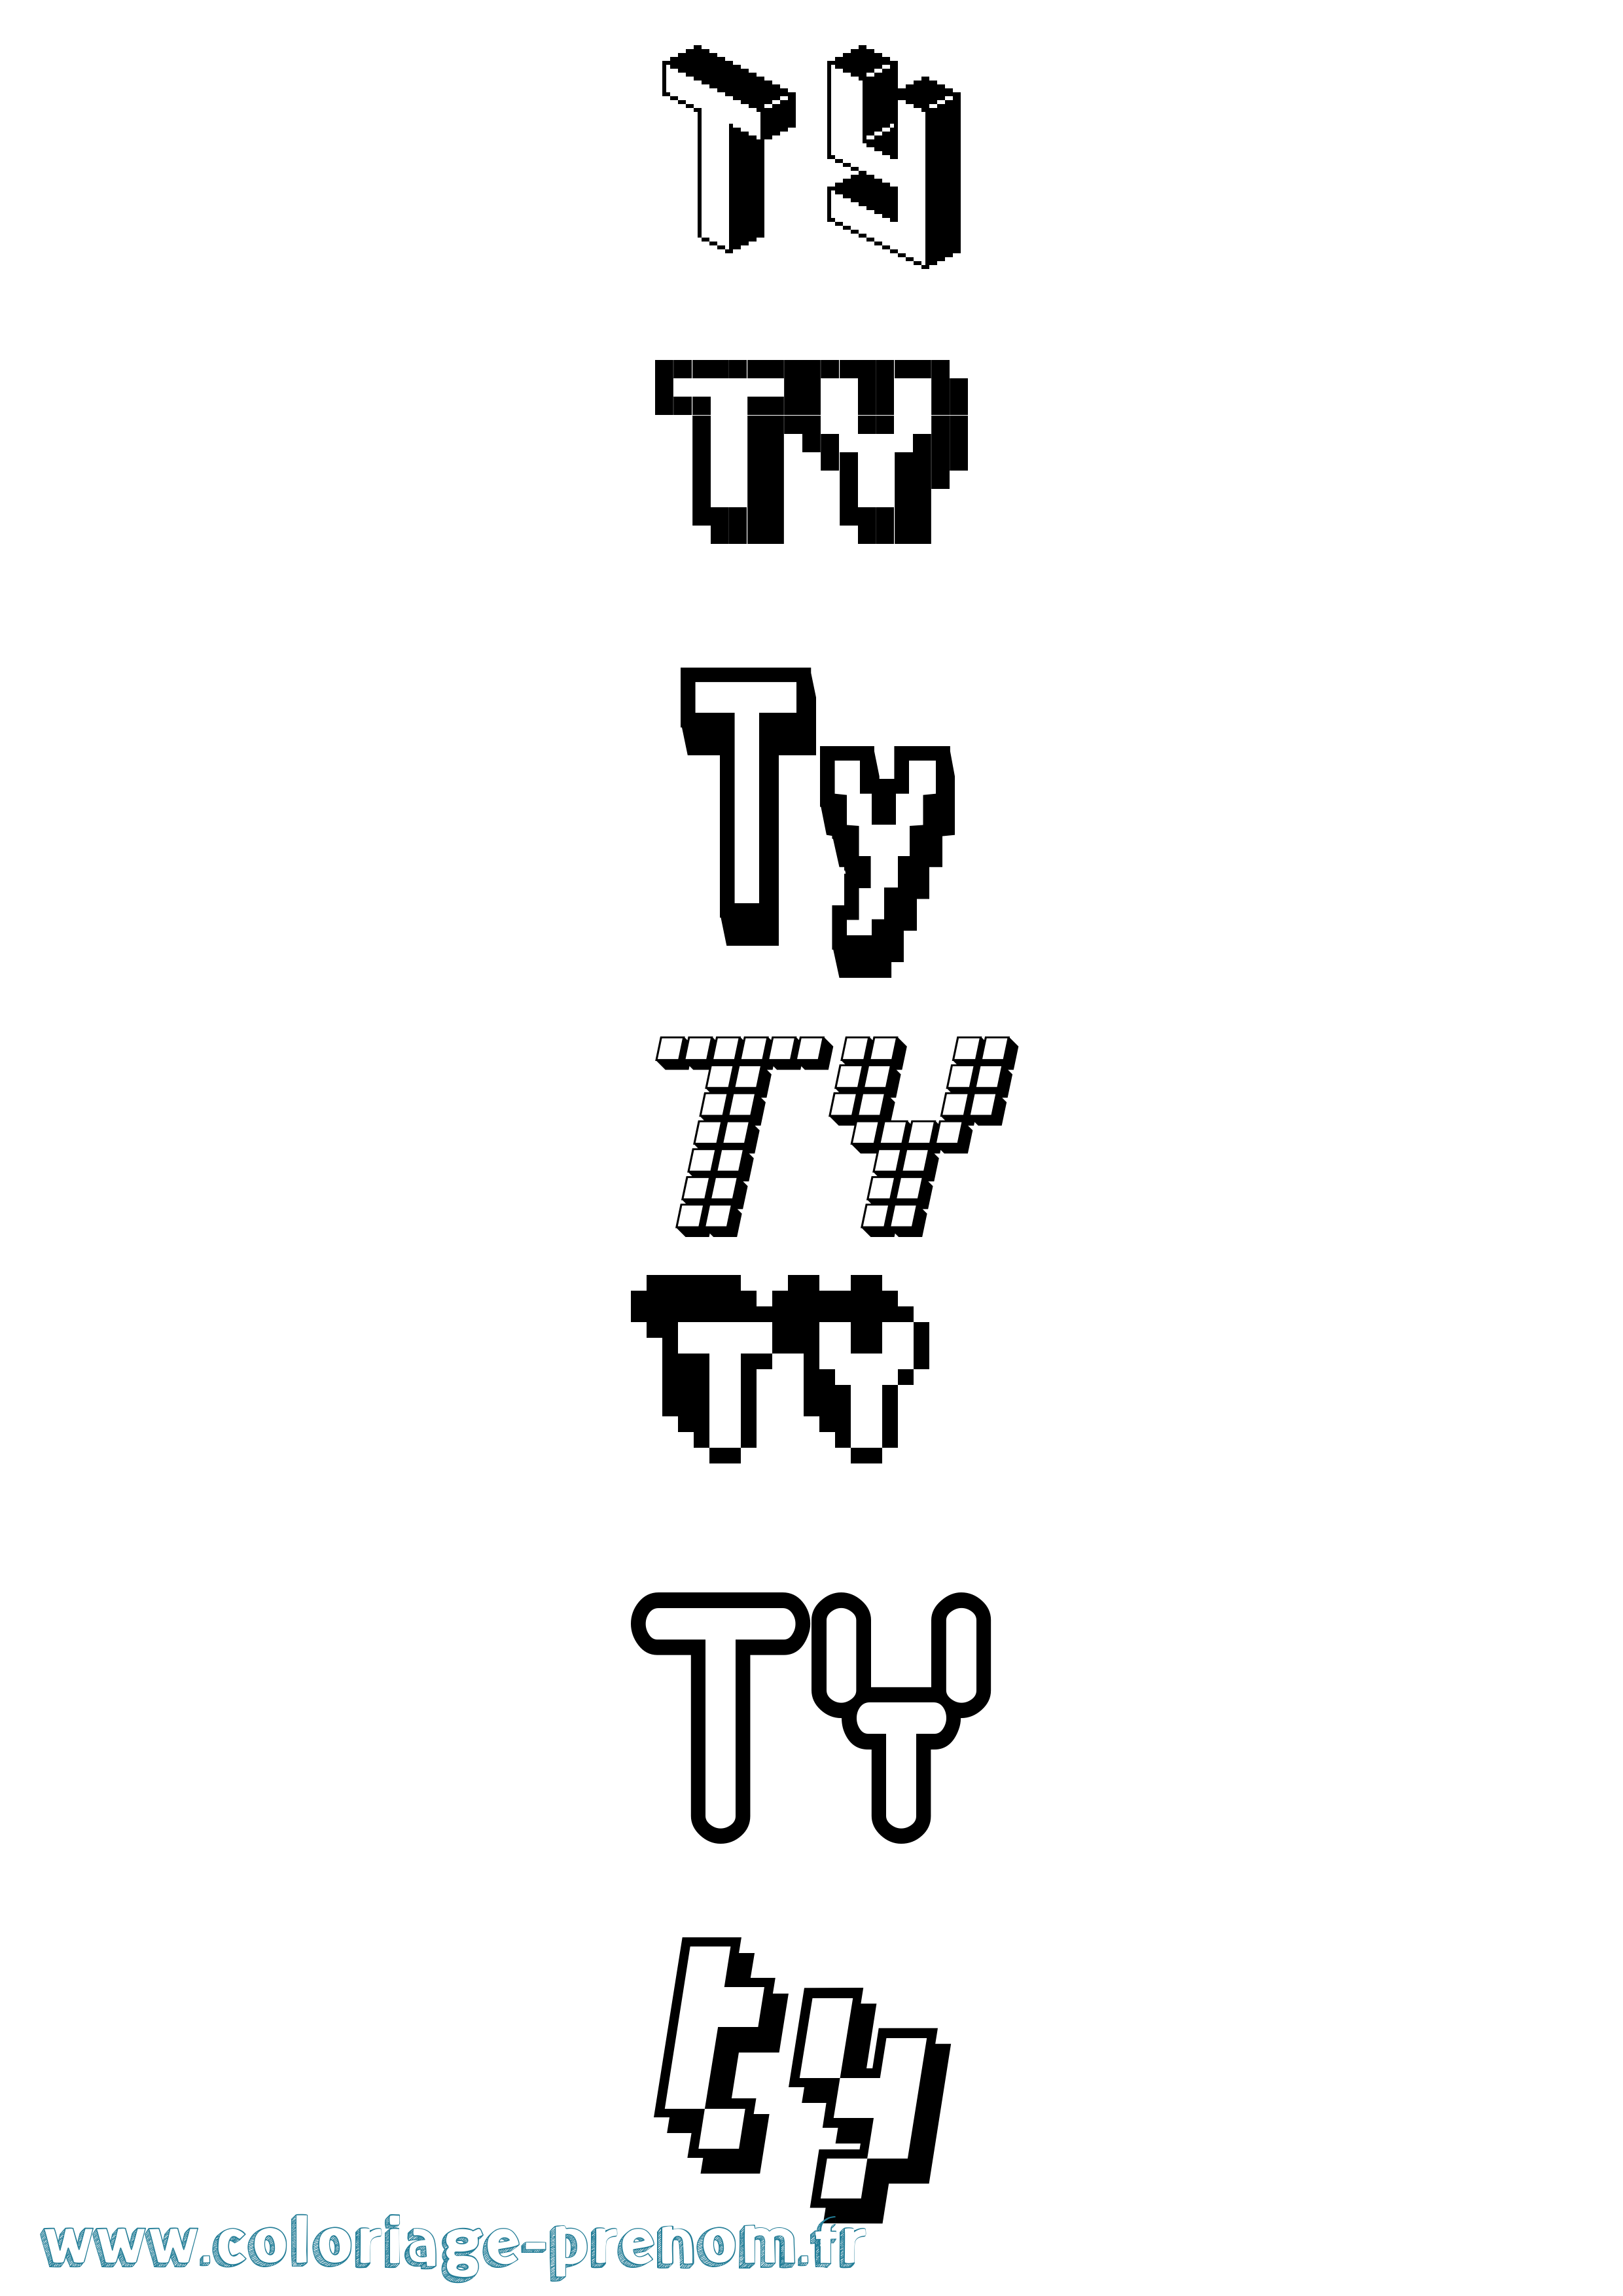 Coloriage prénom Ty Pixel